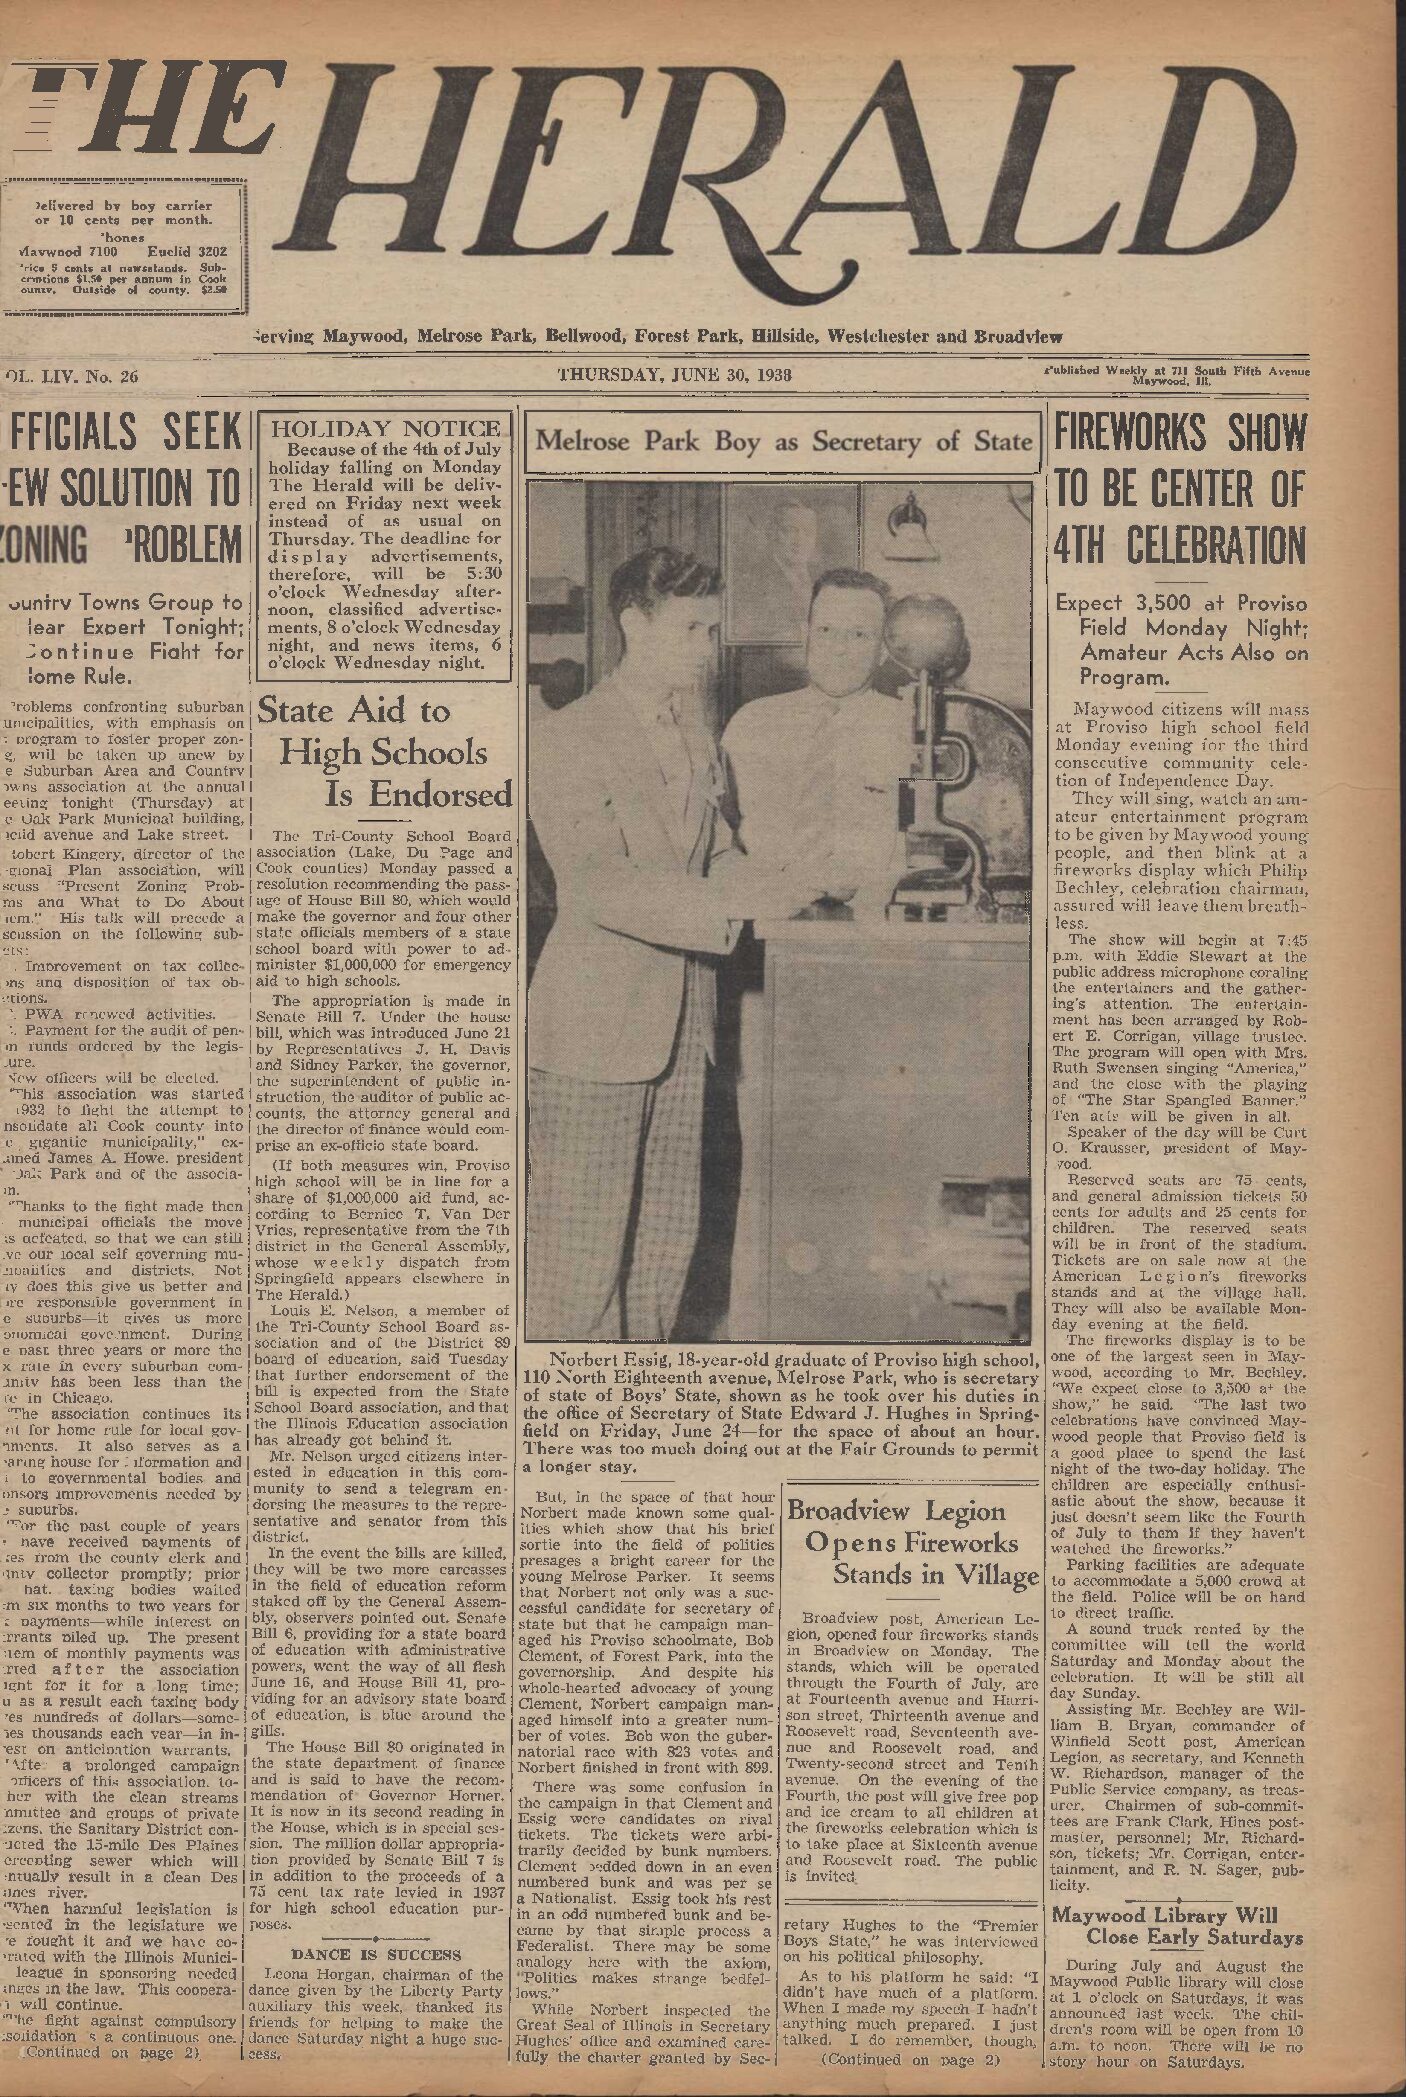 The Herald – 19380630